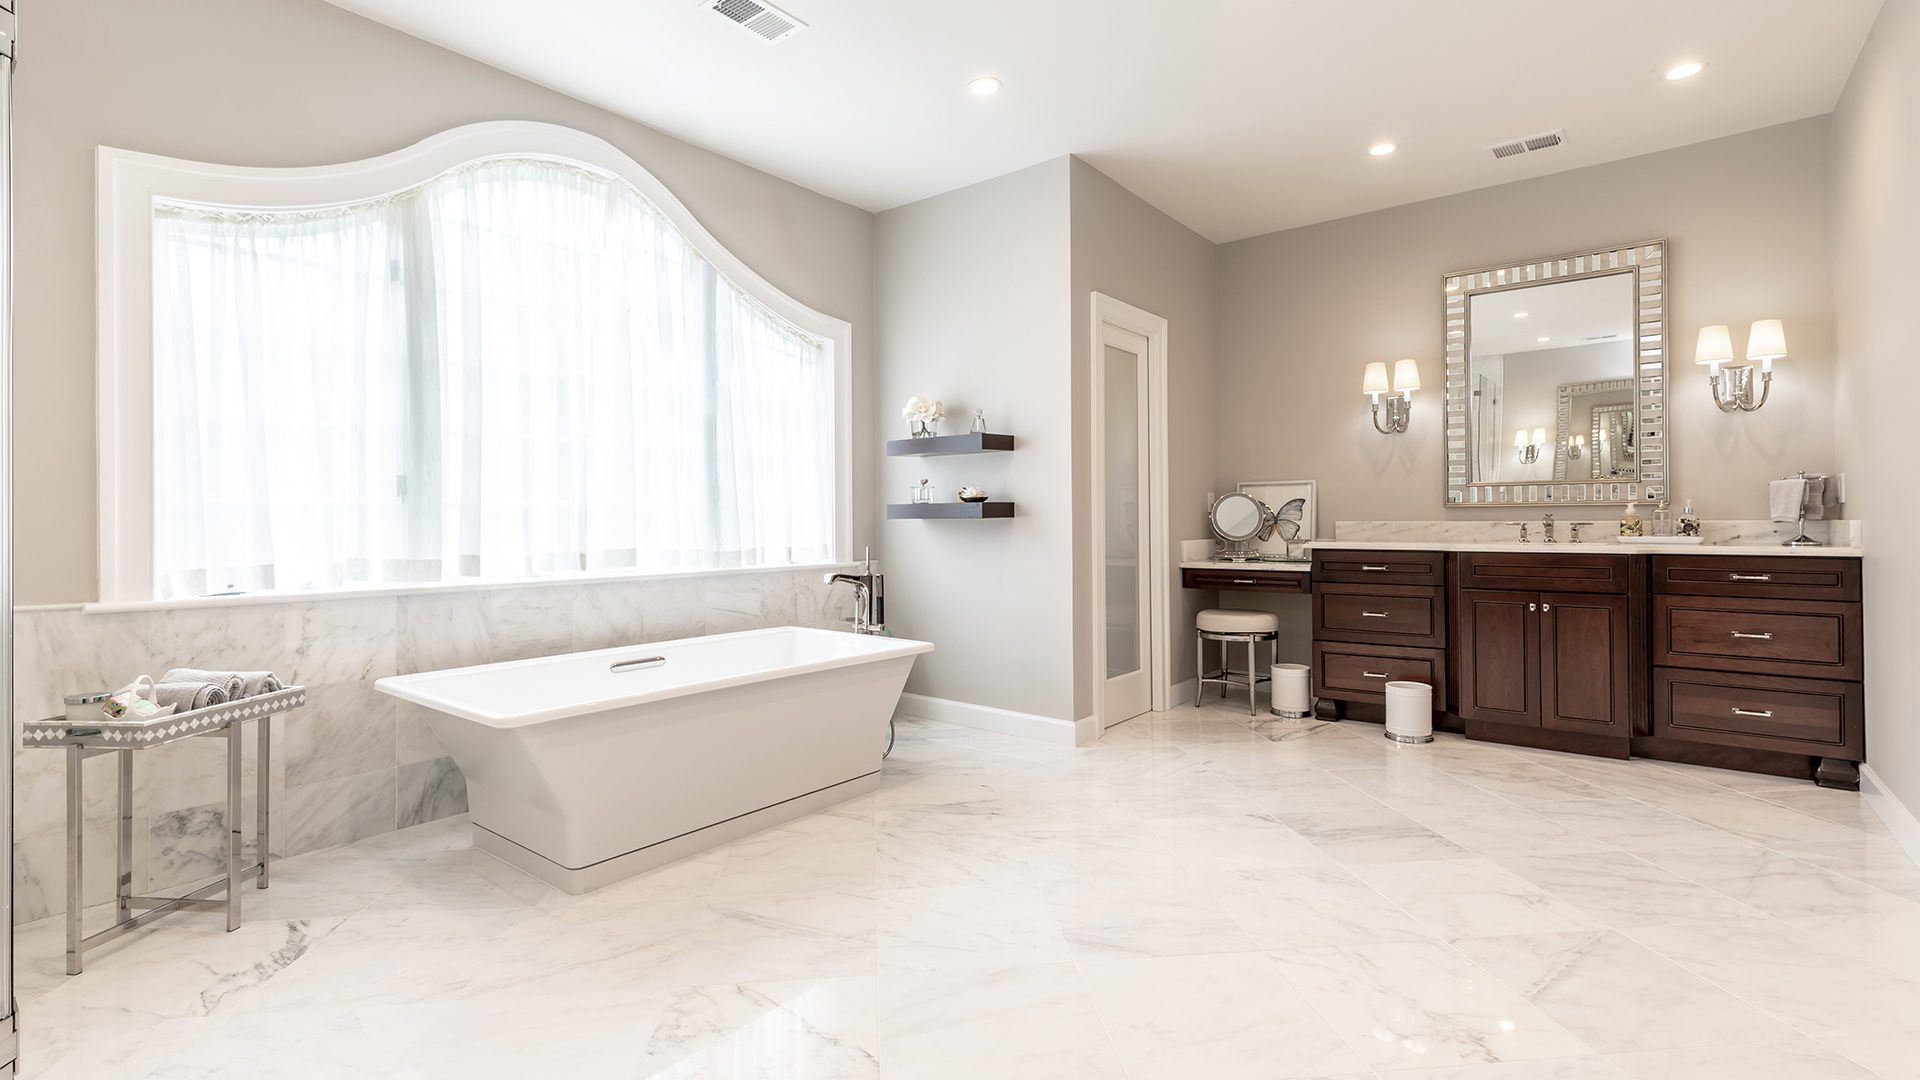 2020 NARI Capital CotY Grand Award Winner, Residential Bath Over $100,000